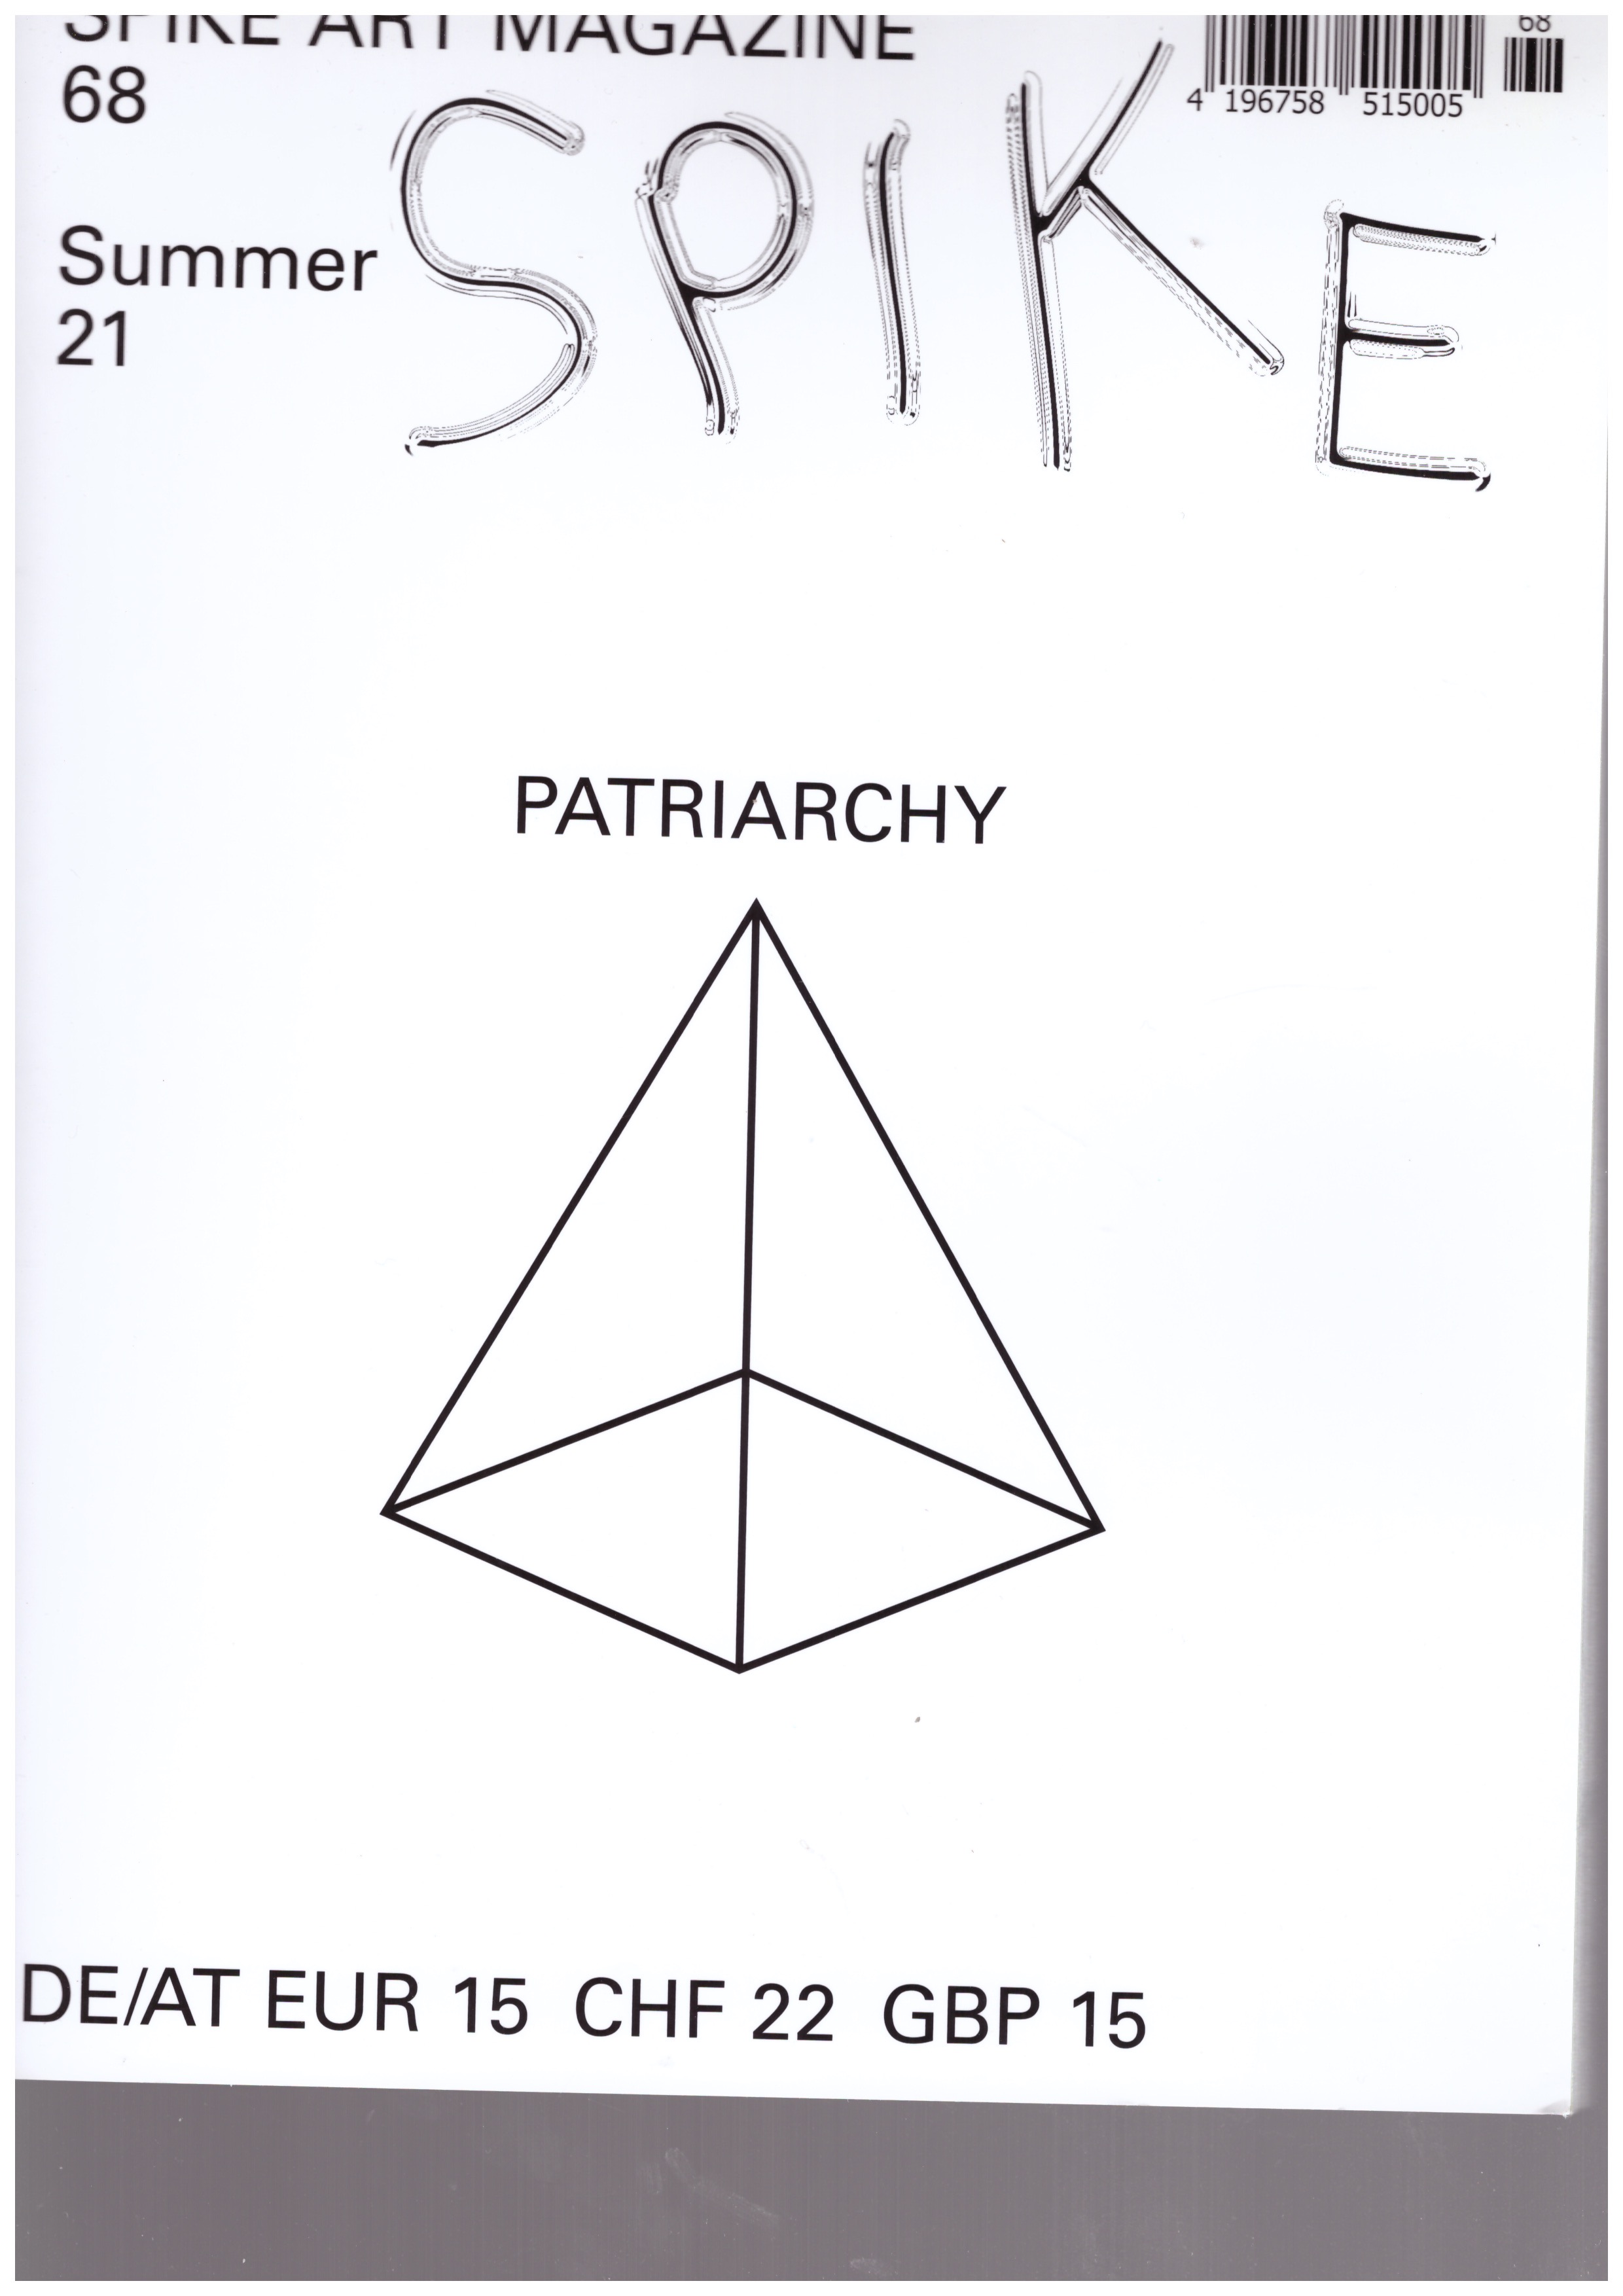 VITORELLI, Rita (ed.) - Spike Art Magazine #68 Summer 2021 - Patriarchy